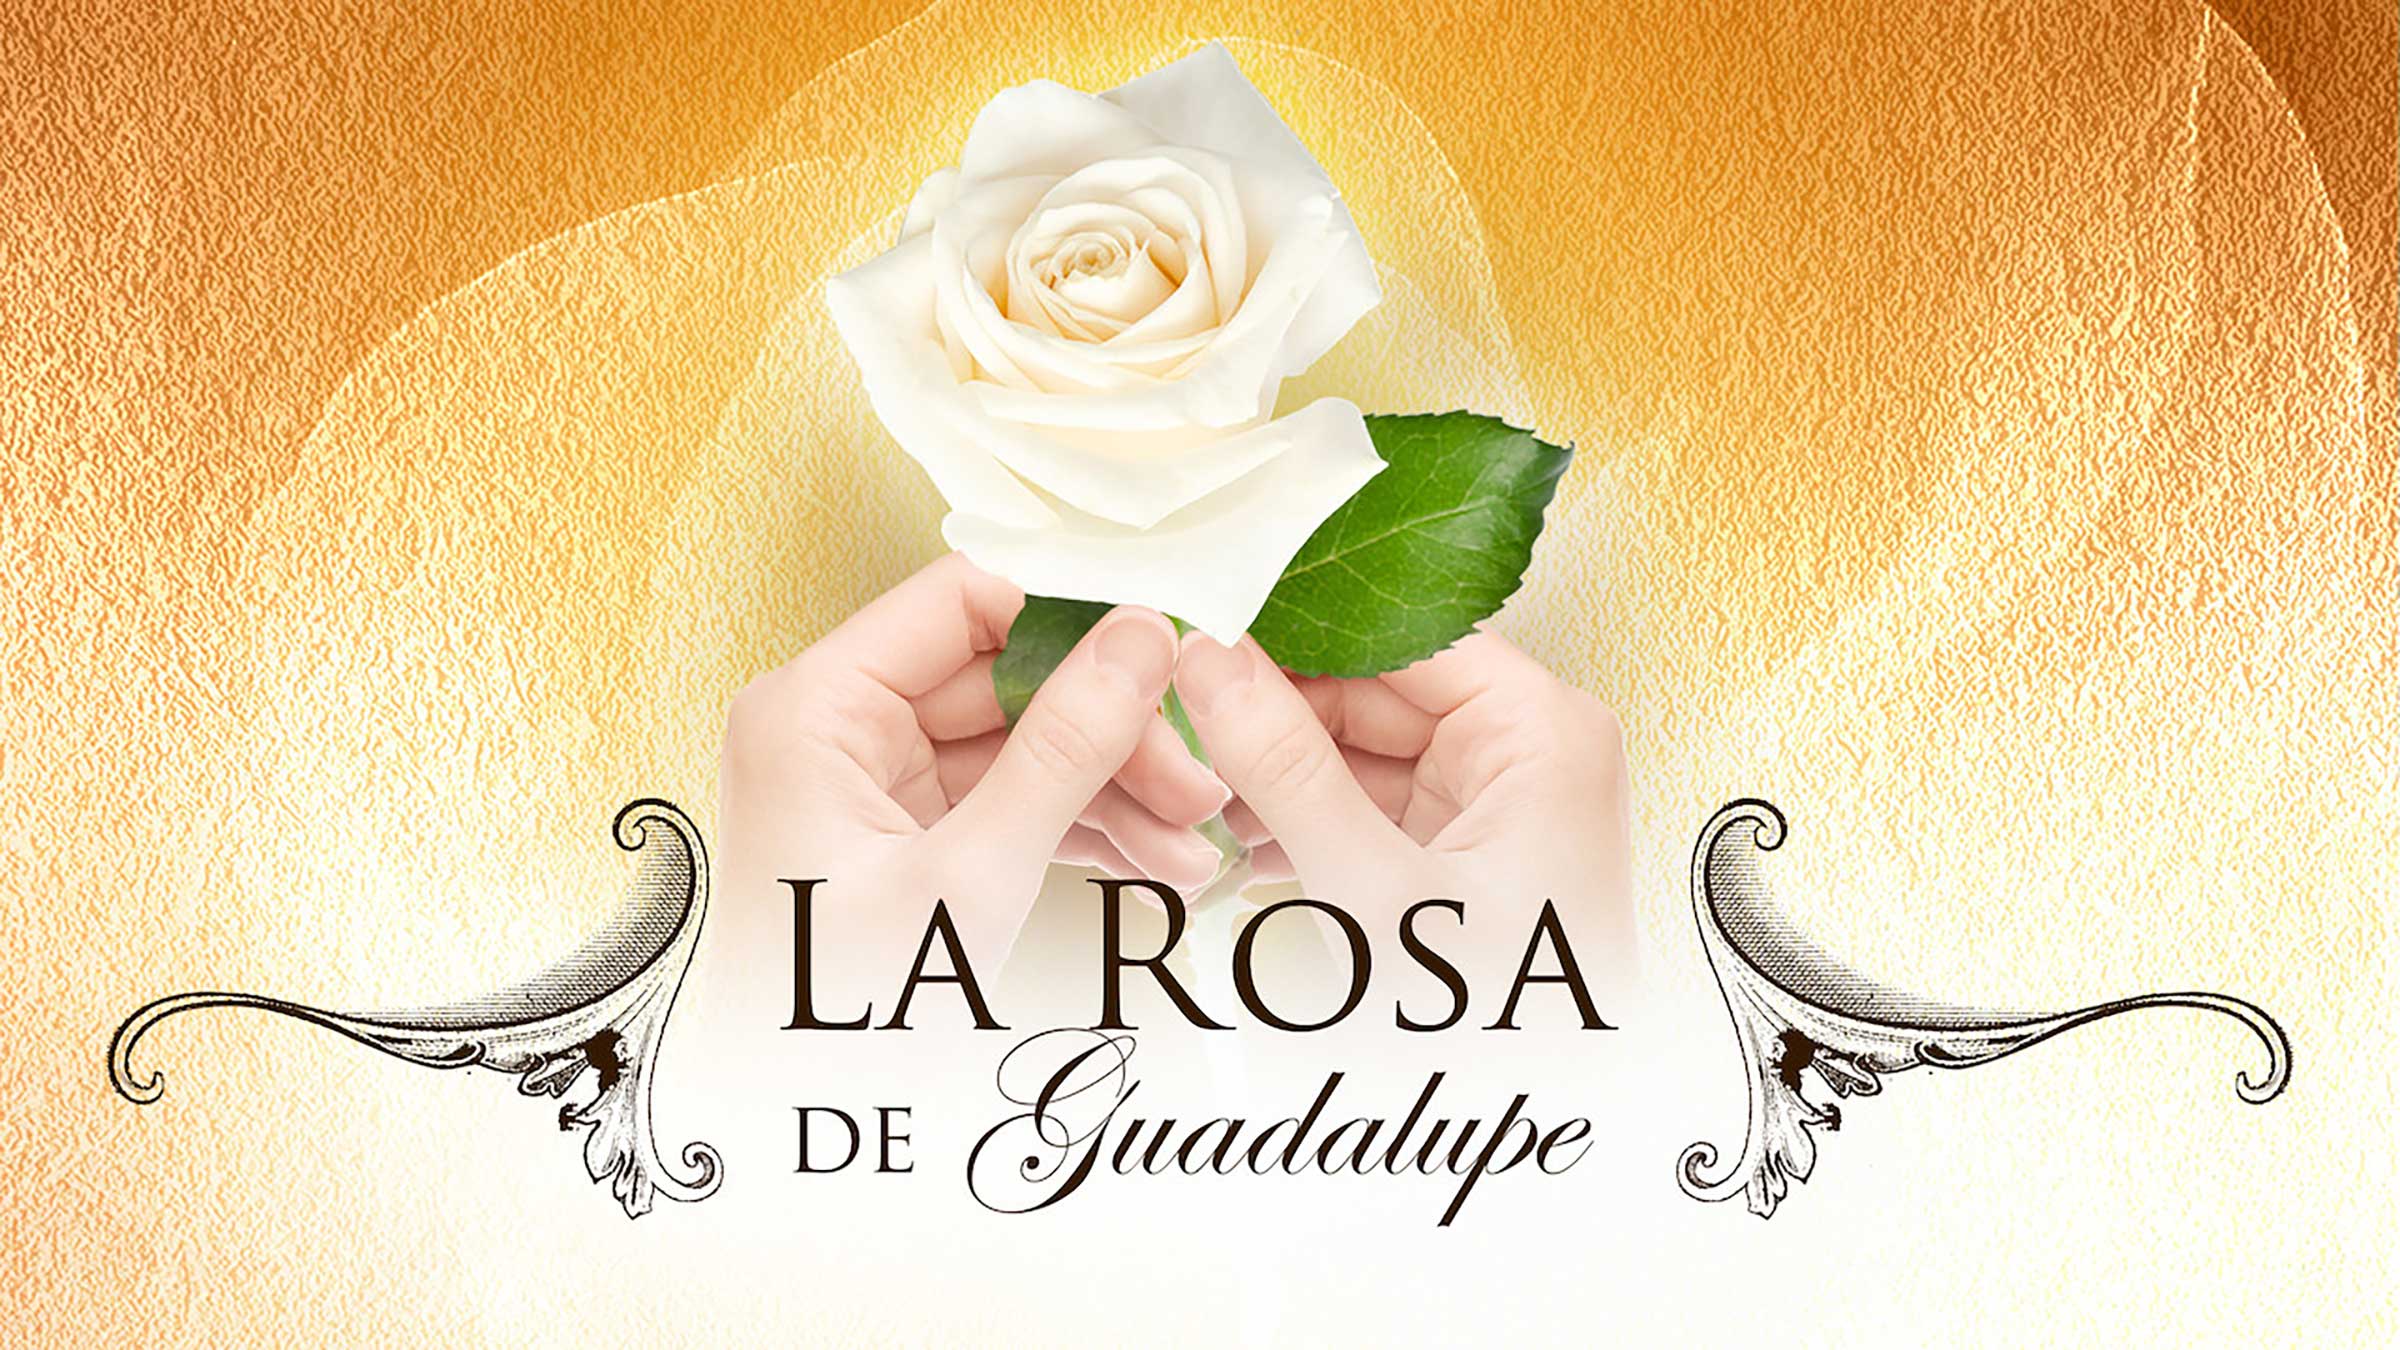 Guadalupe virgin apron chicano blessed maria pedir abuela halter madonna